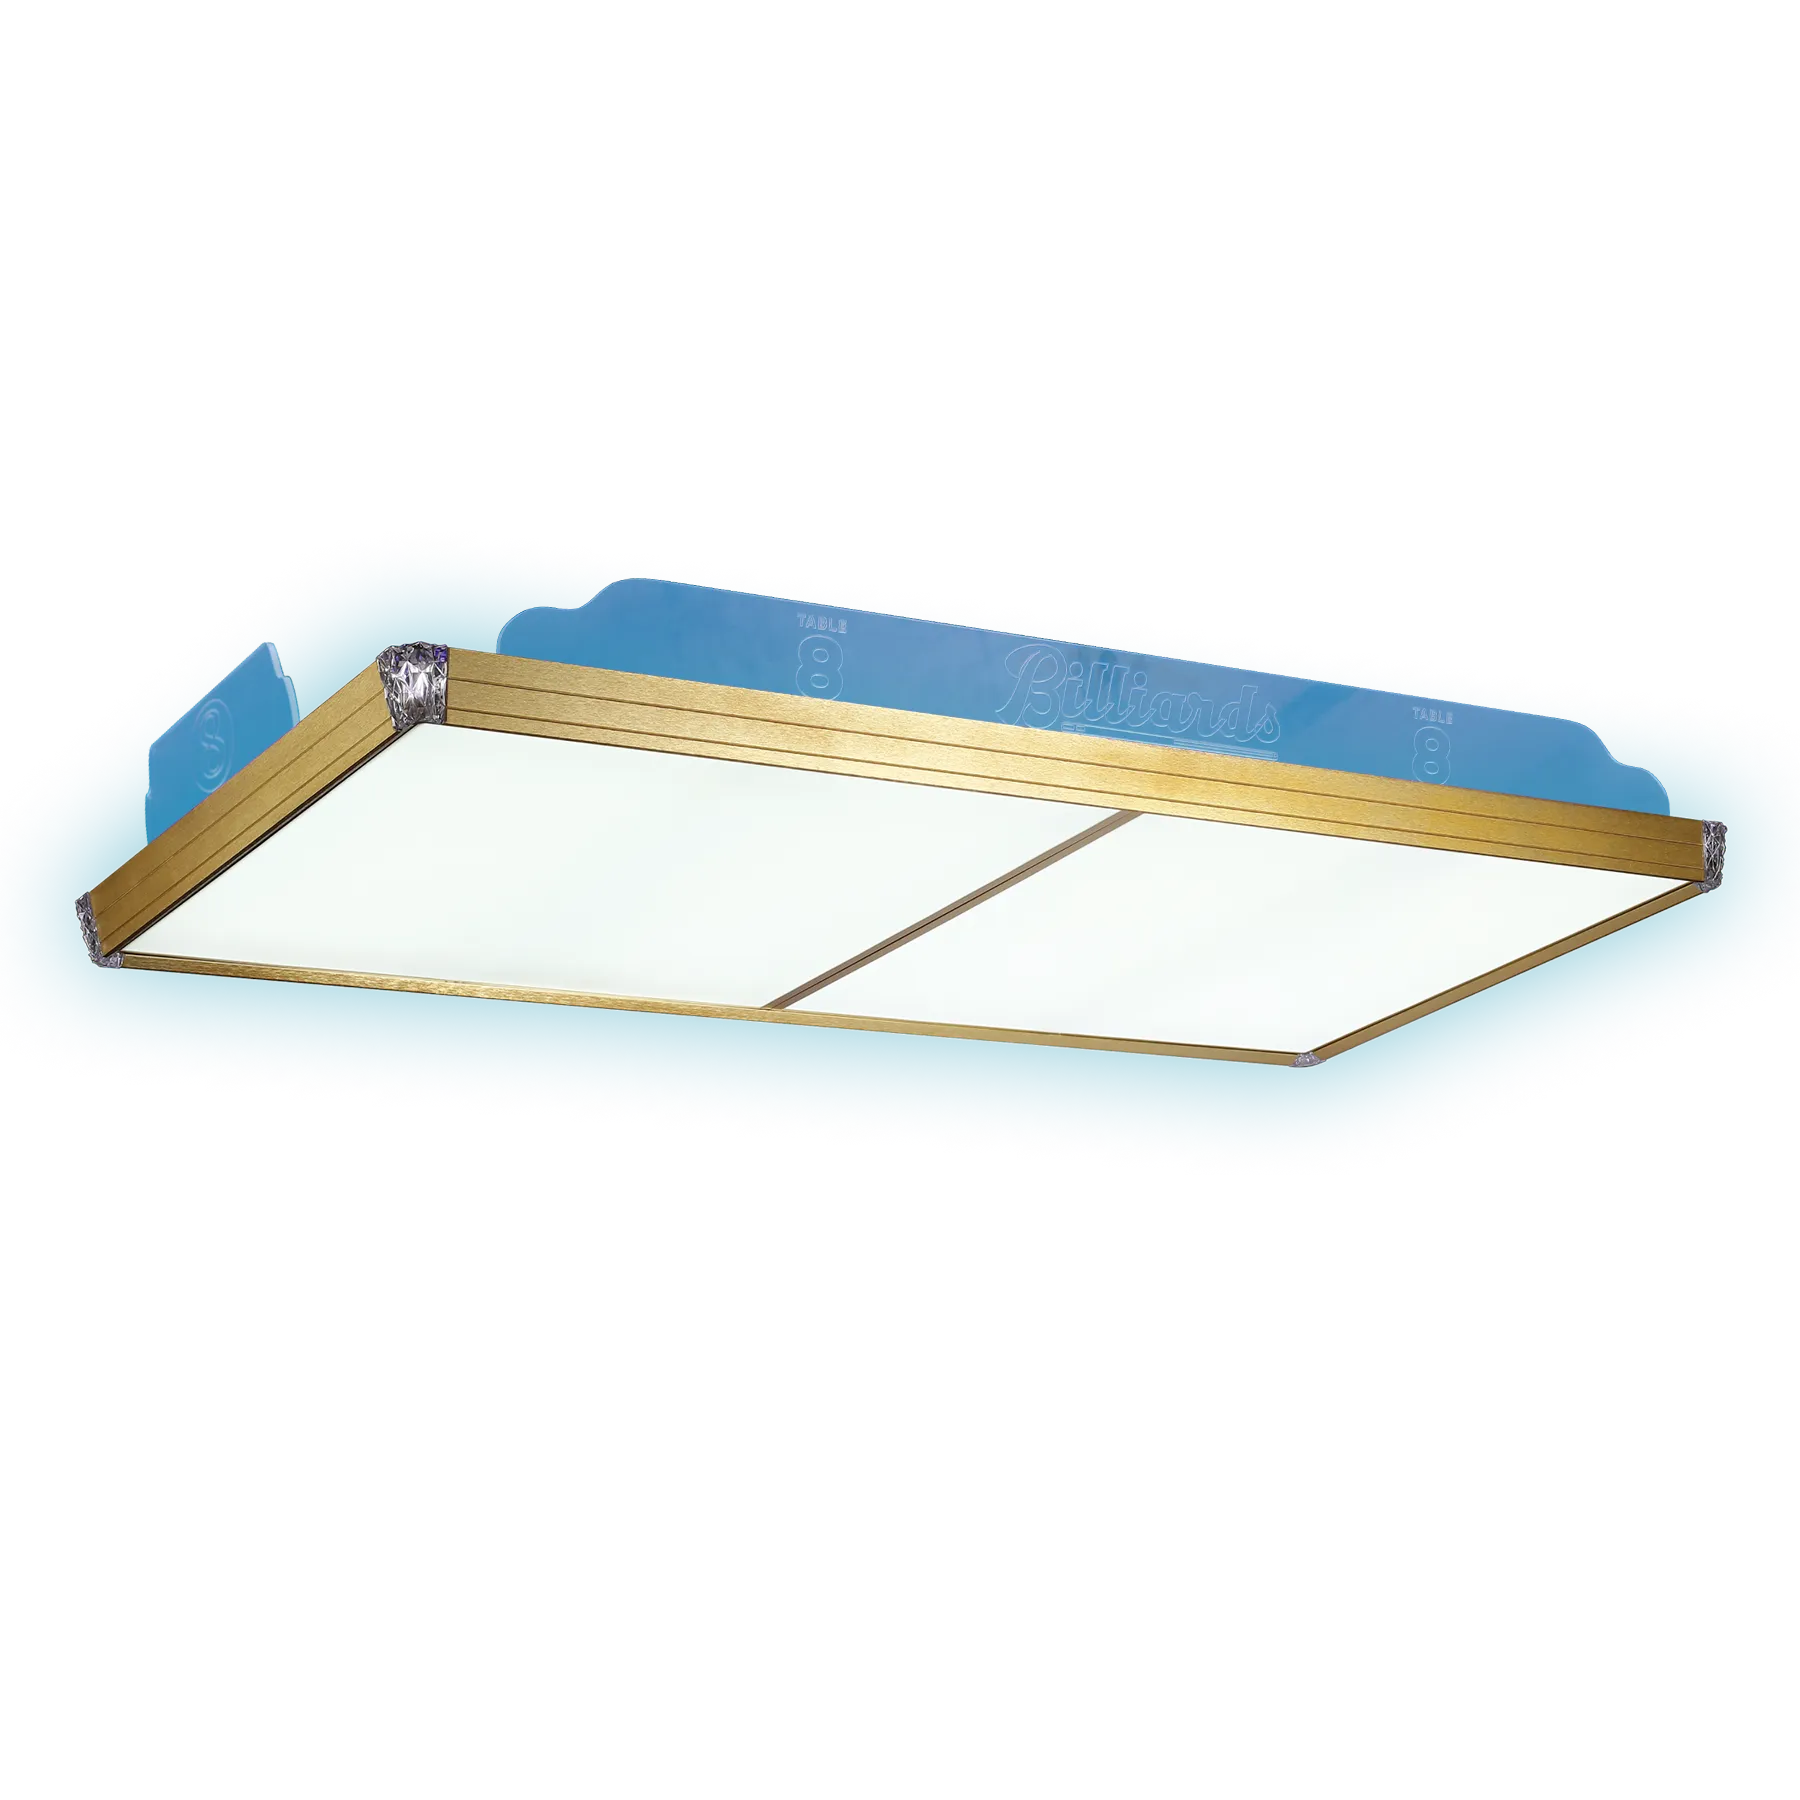 LED BILLIARD LIGHT - H Series H2 - For 9 FT Pool Table